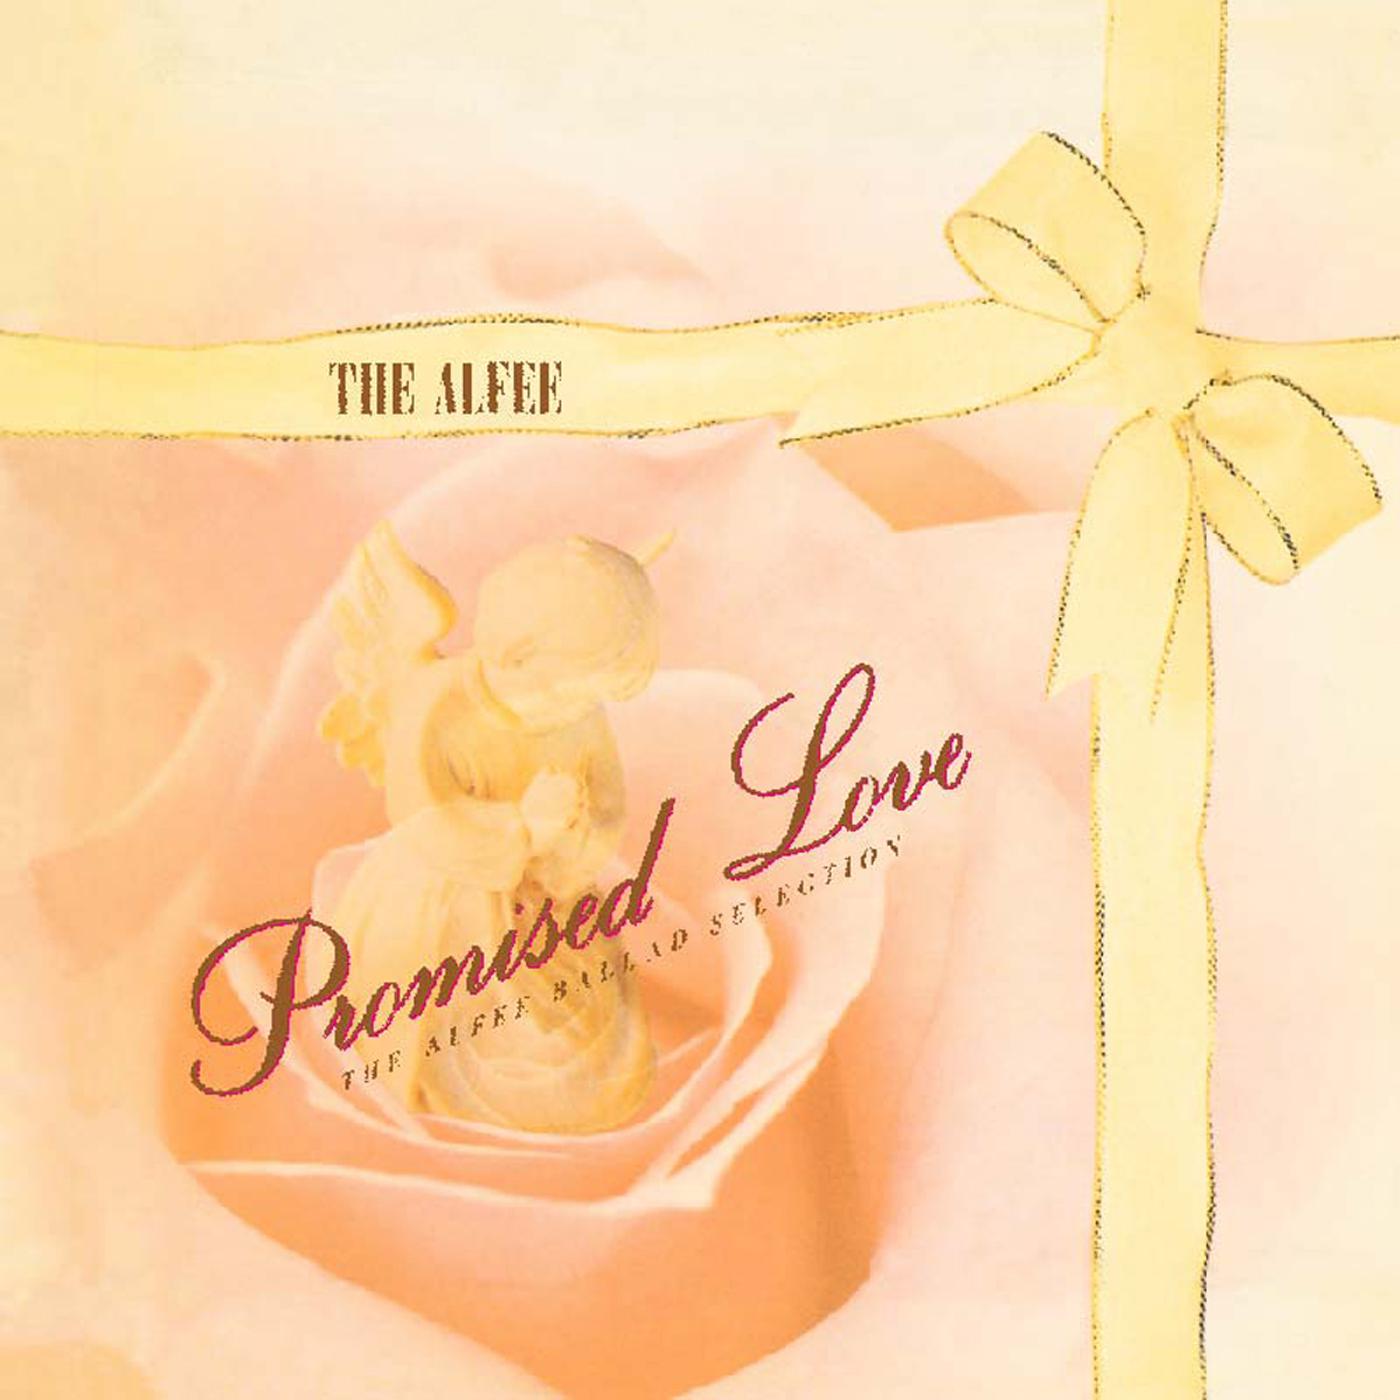 PROMISED LOVE～THE ALFEE BALLAD SELECTION专辑